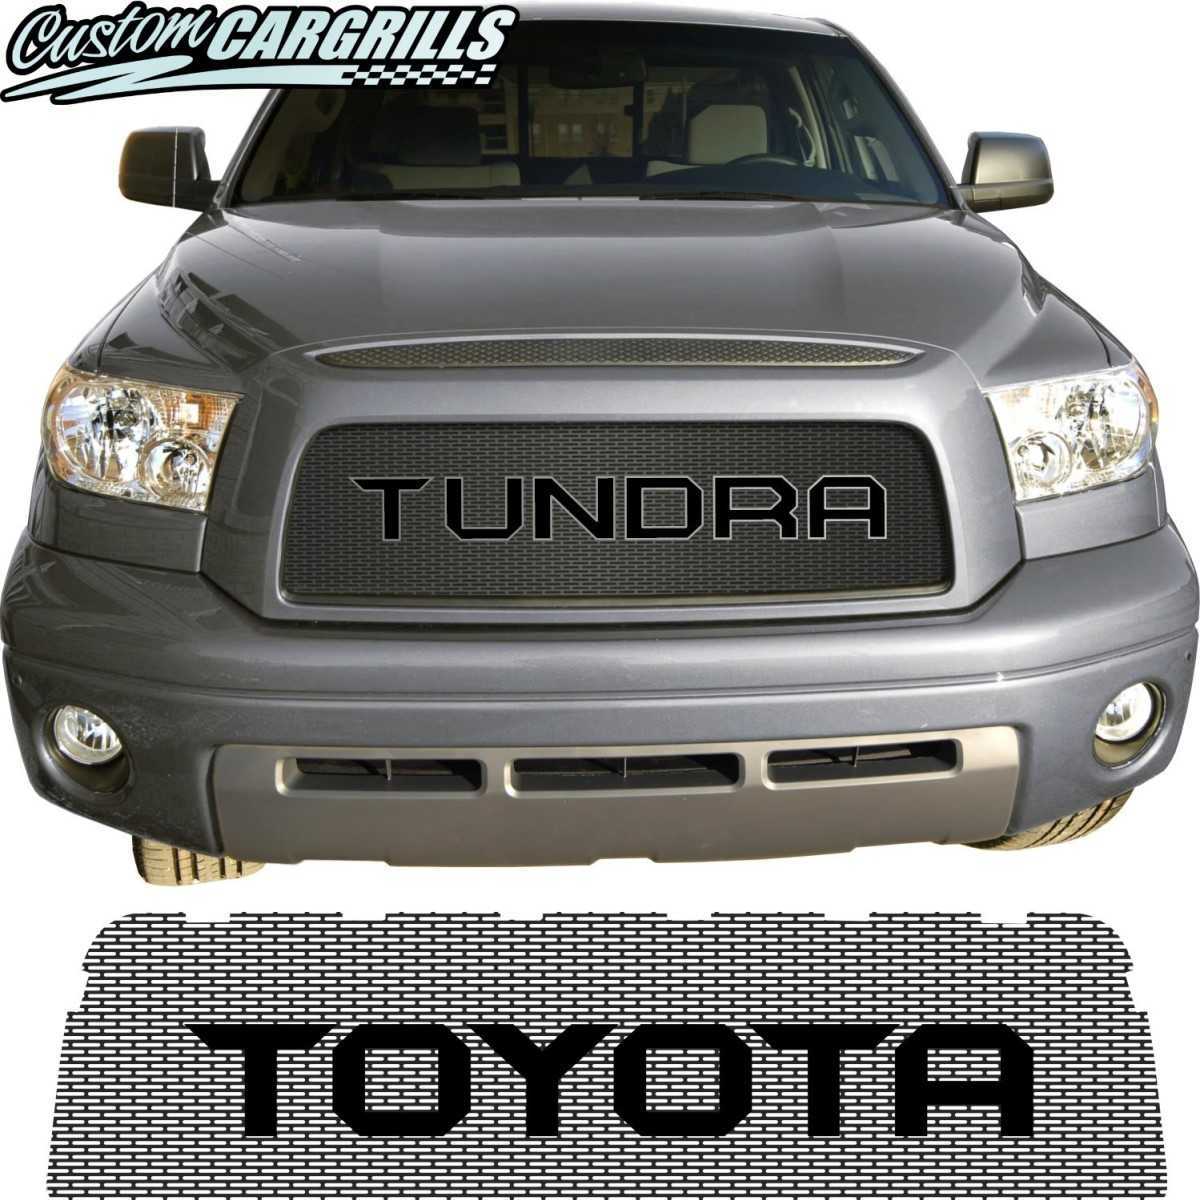 Custom Mesh Grills For Toyota Tundra By Customcargrills Com